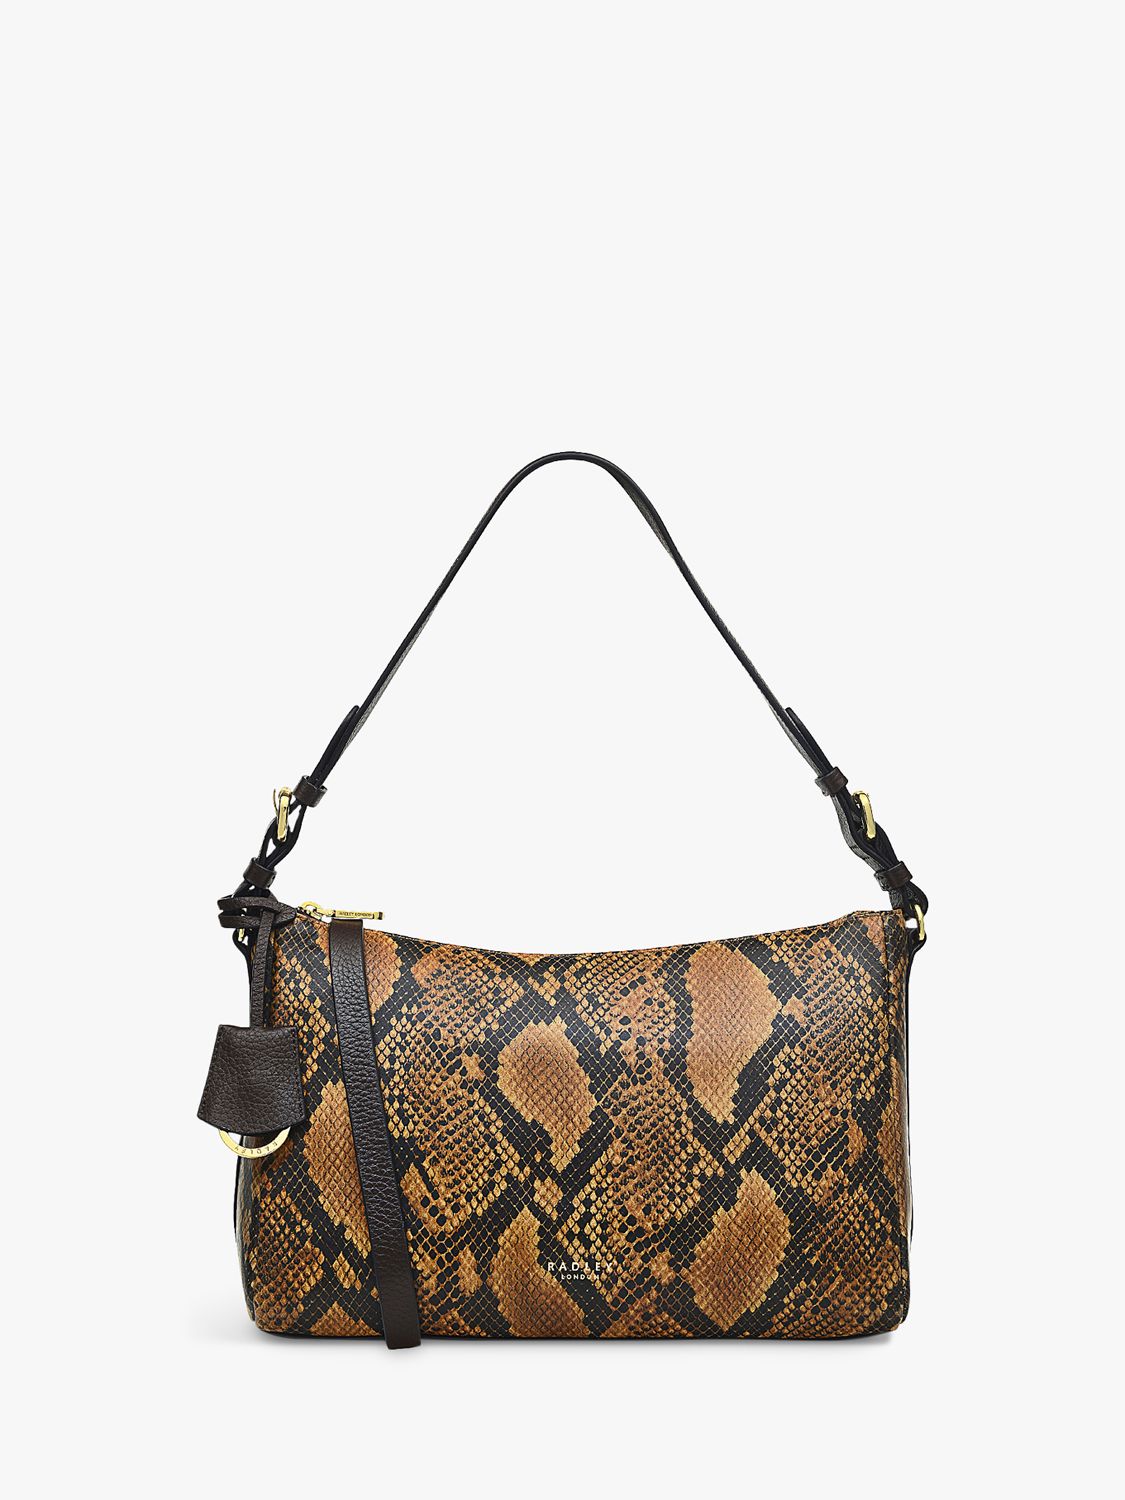 Luxury snakeskin handbags for sale  Bags, Fall bags handbags, Fall handbags